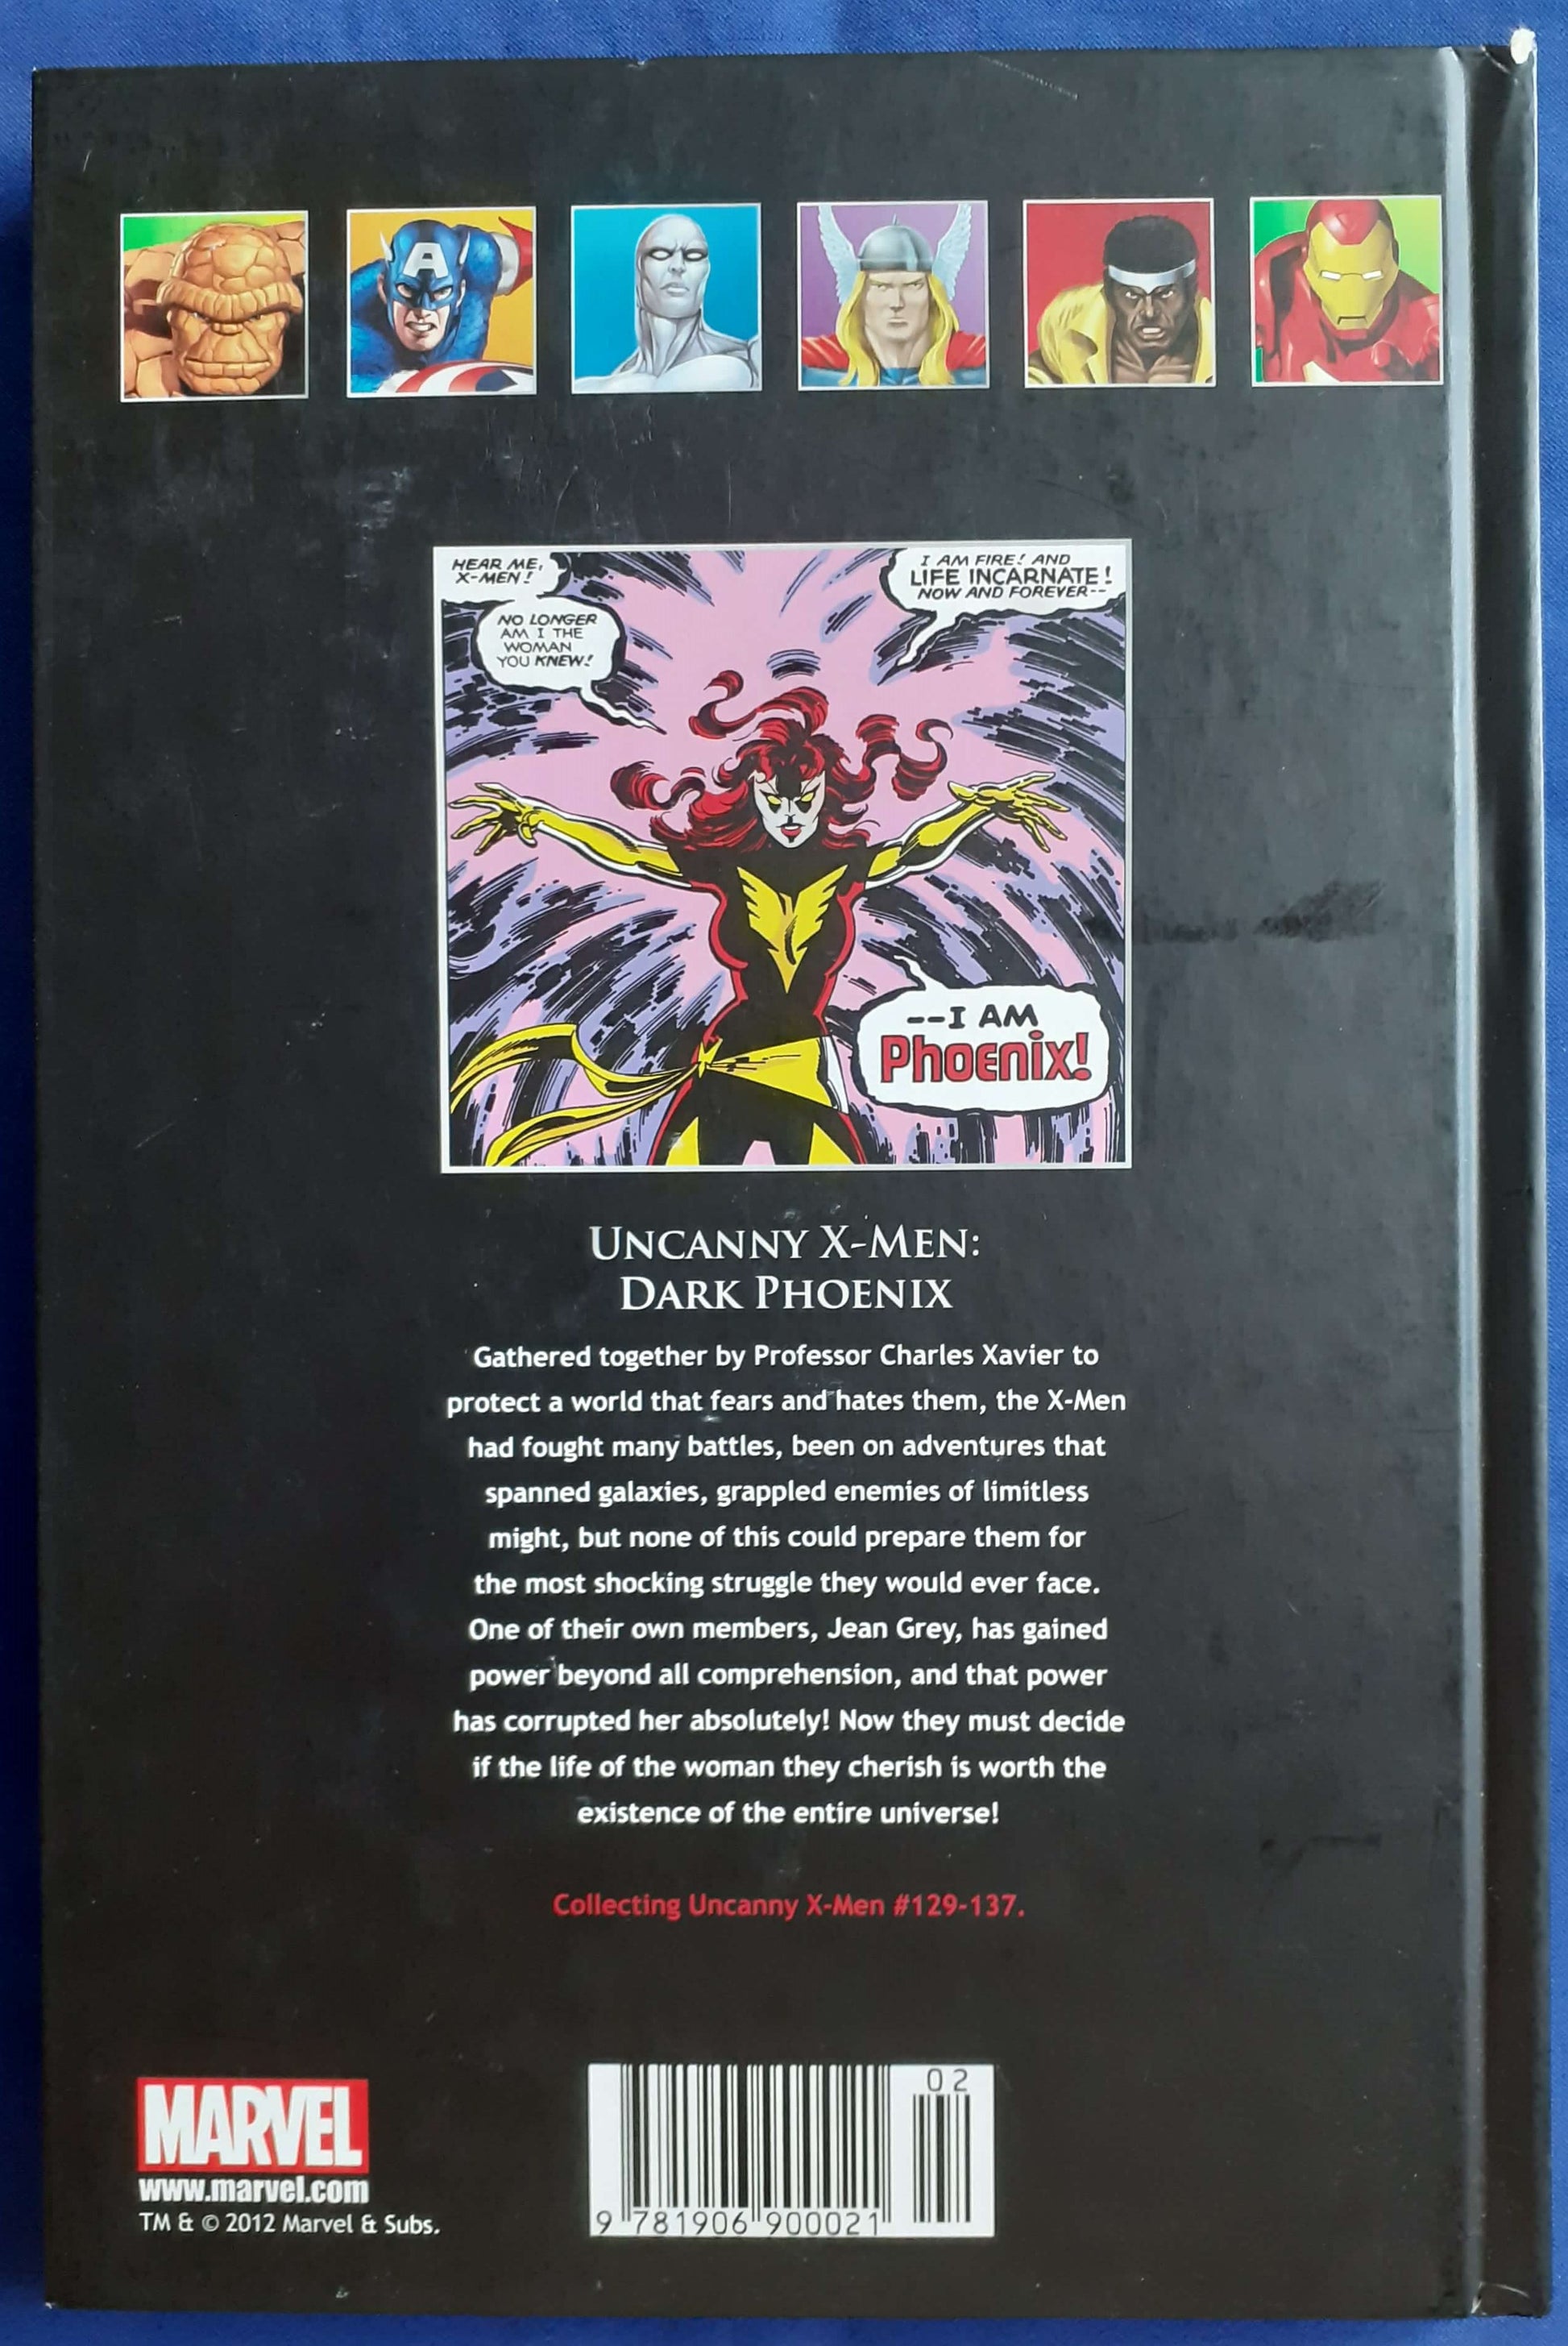 Marvel Ultimate Graphic Novel Collection Issue 2 : Uncanny X-Men: Dark Phoenix - x-men comics - Best Books